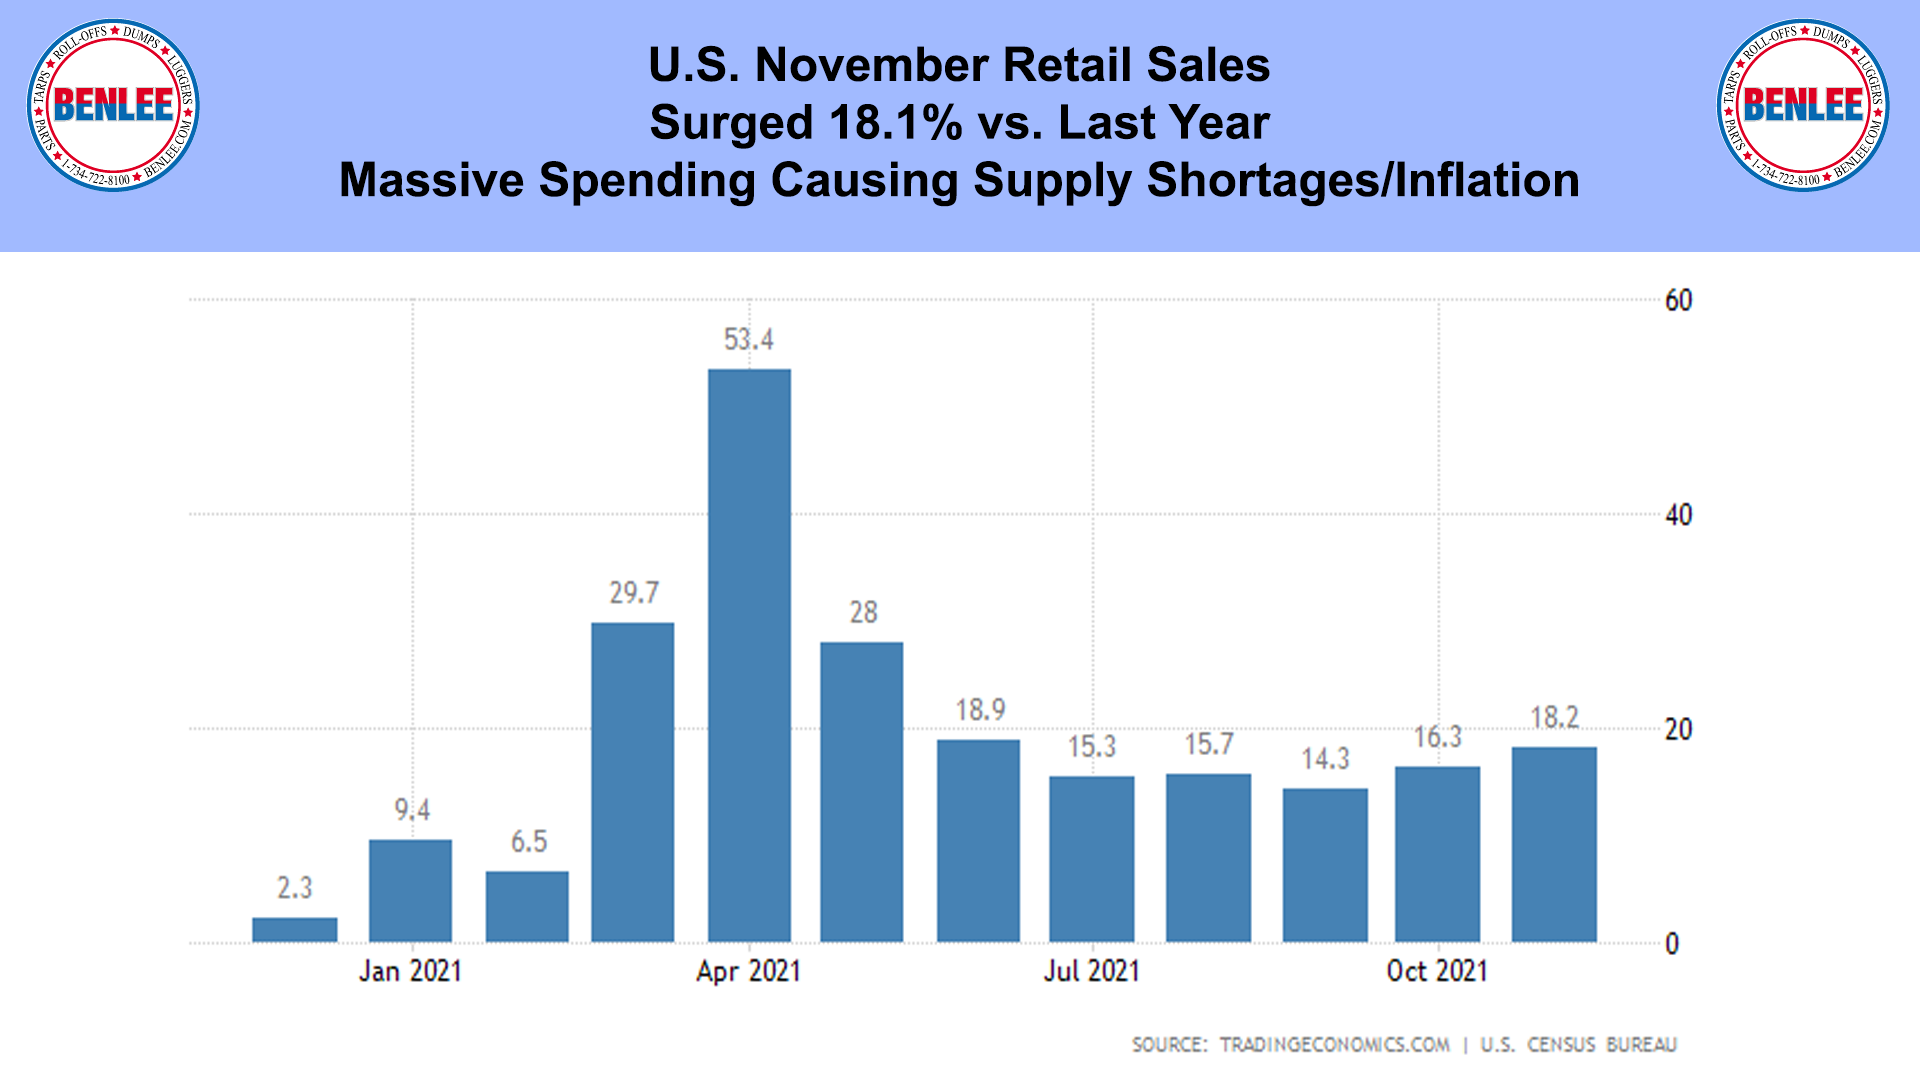 U.S. November Retail Sales